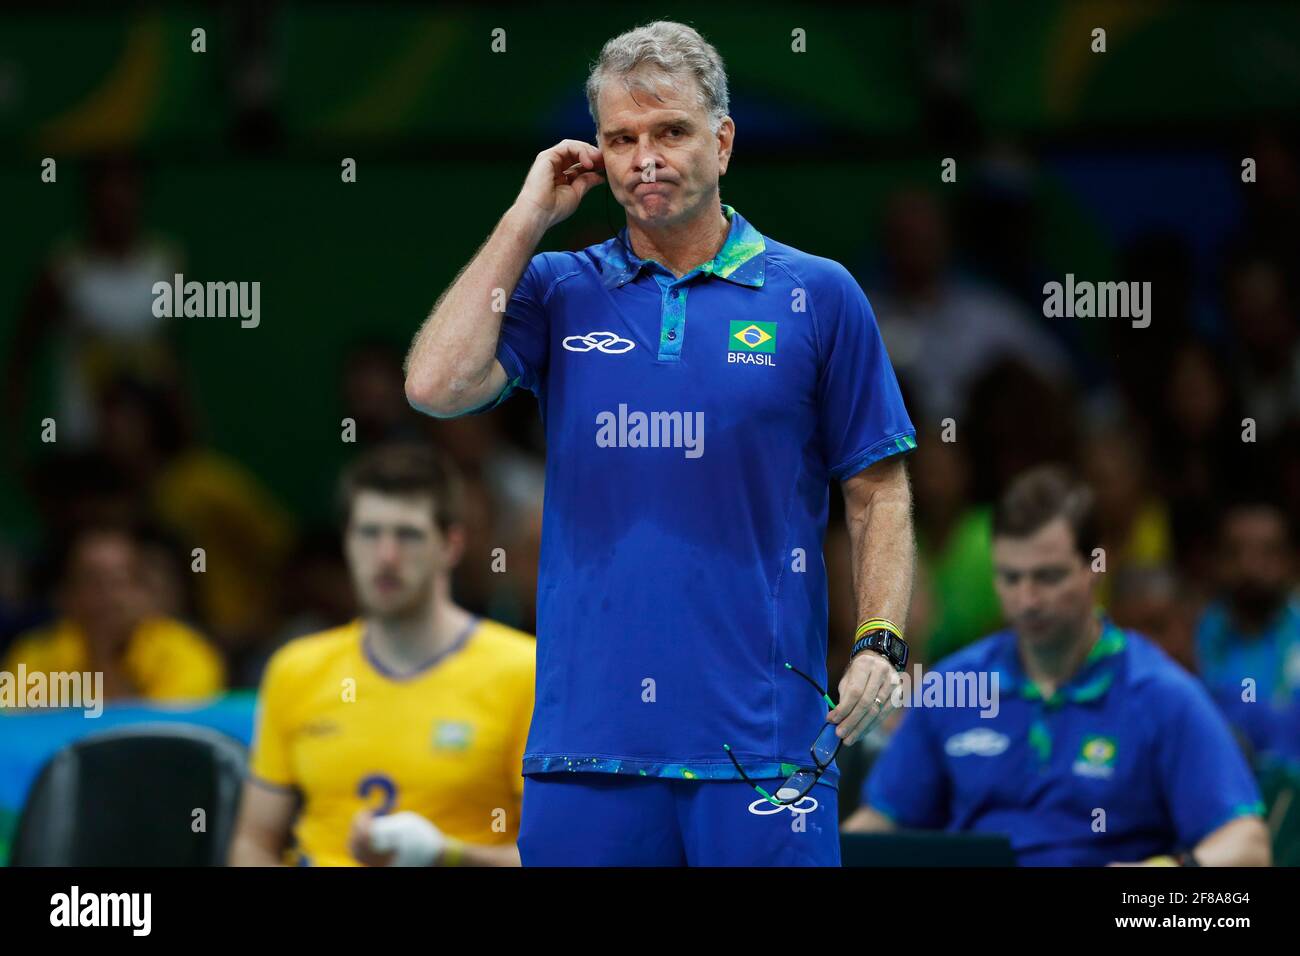 Bernardo Rezende, nicknamed Bernardinho, brazilian national volleyball team coach and former player at Rio 2016 Olympic Games final gold medal match Stock Photo